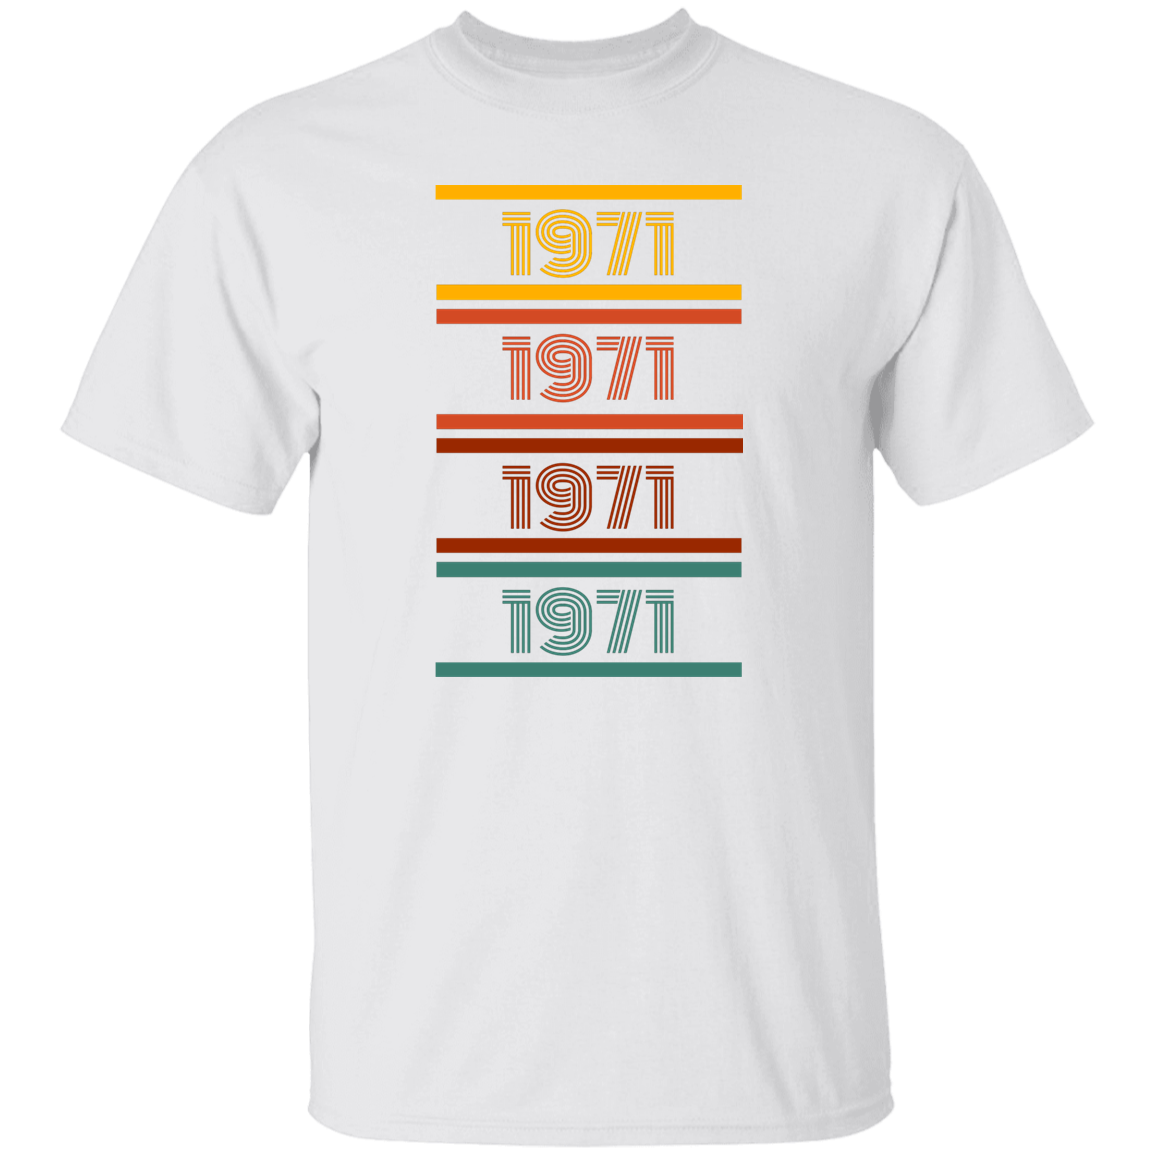 1971 5.3 oz. T-Shirt